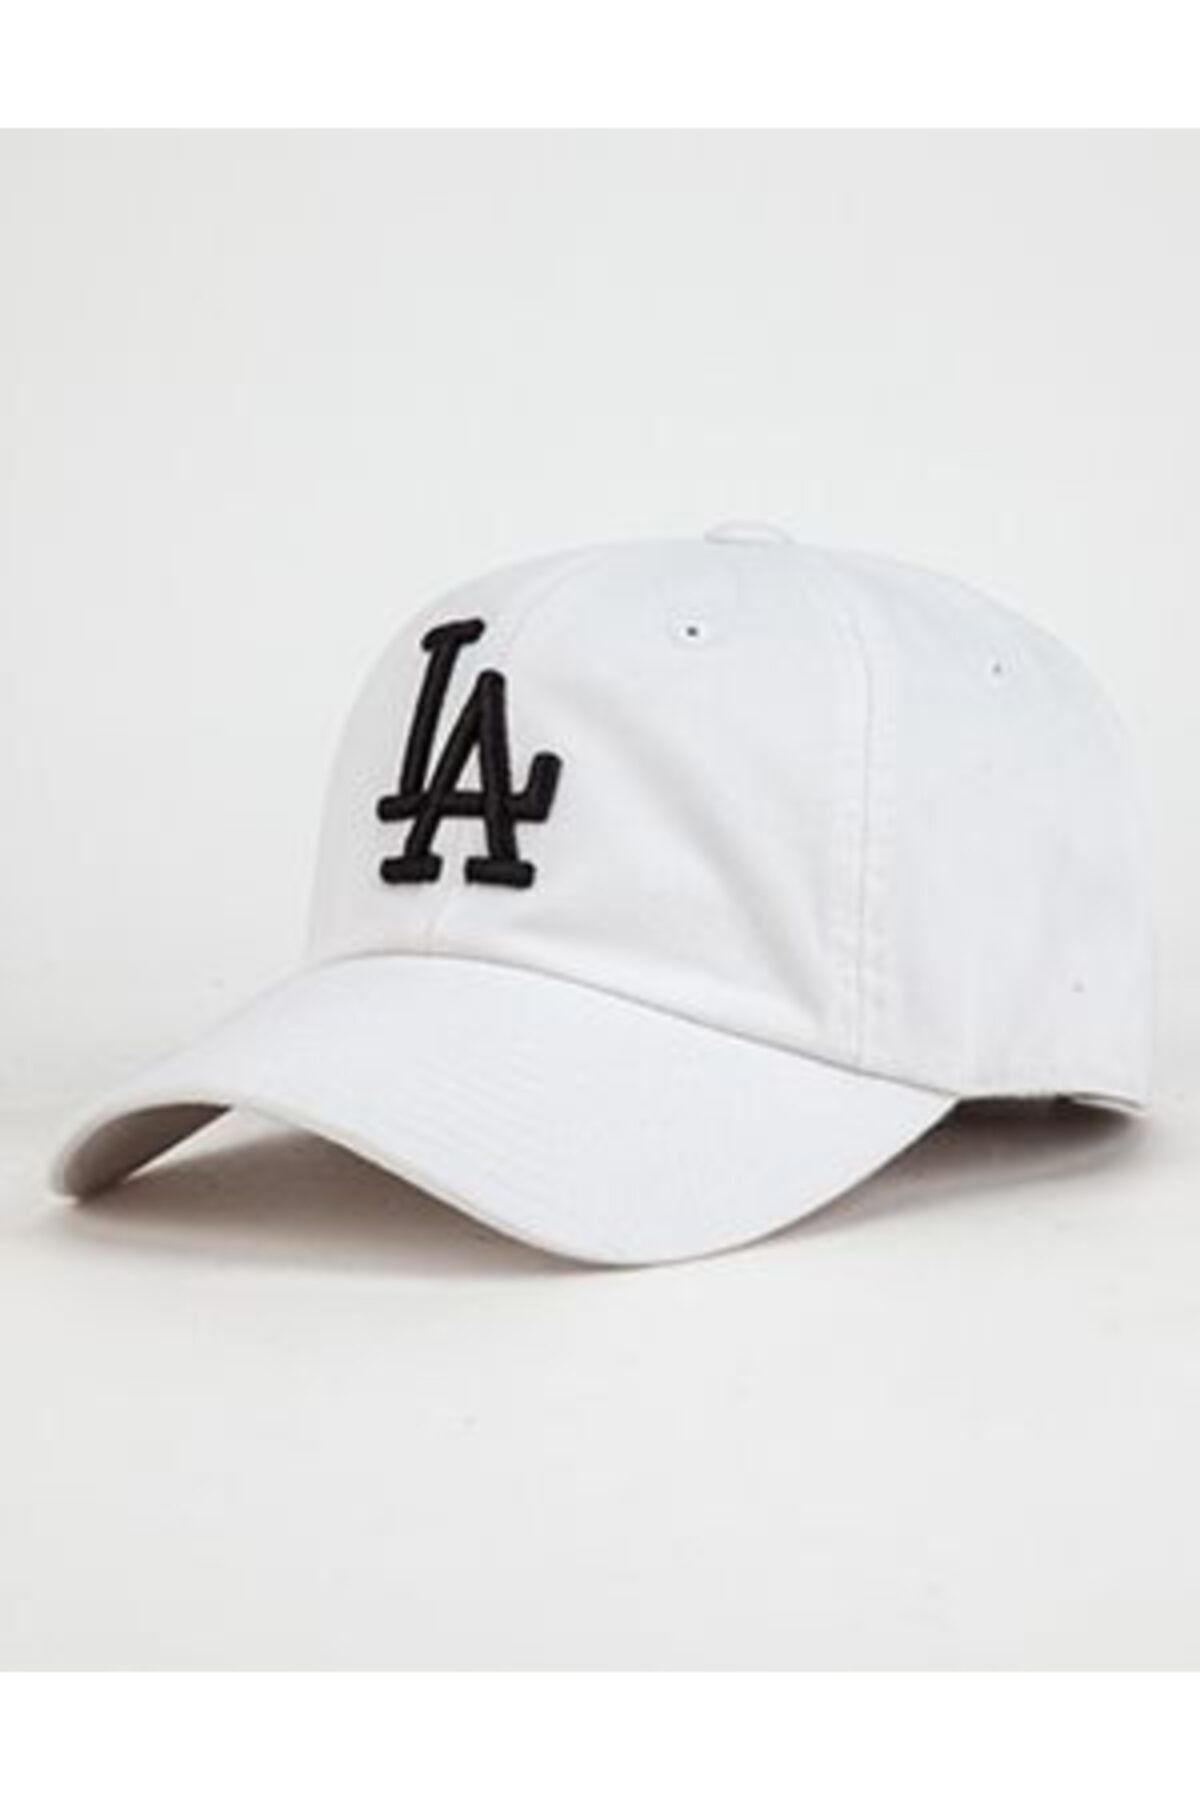 La hat. Кепка la MLB. La Dodgers кепка. Кепка la Dodgers черная. Кепка New era la.